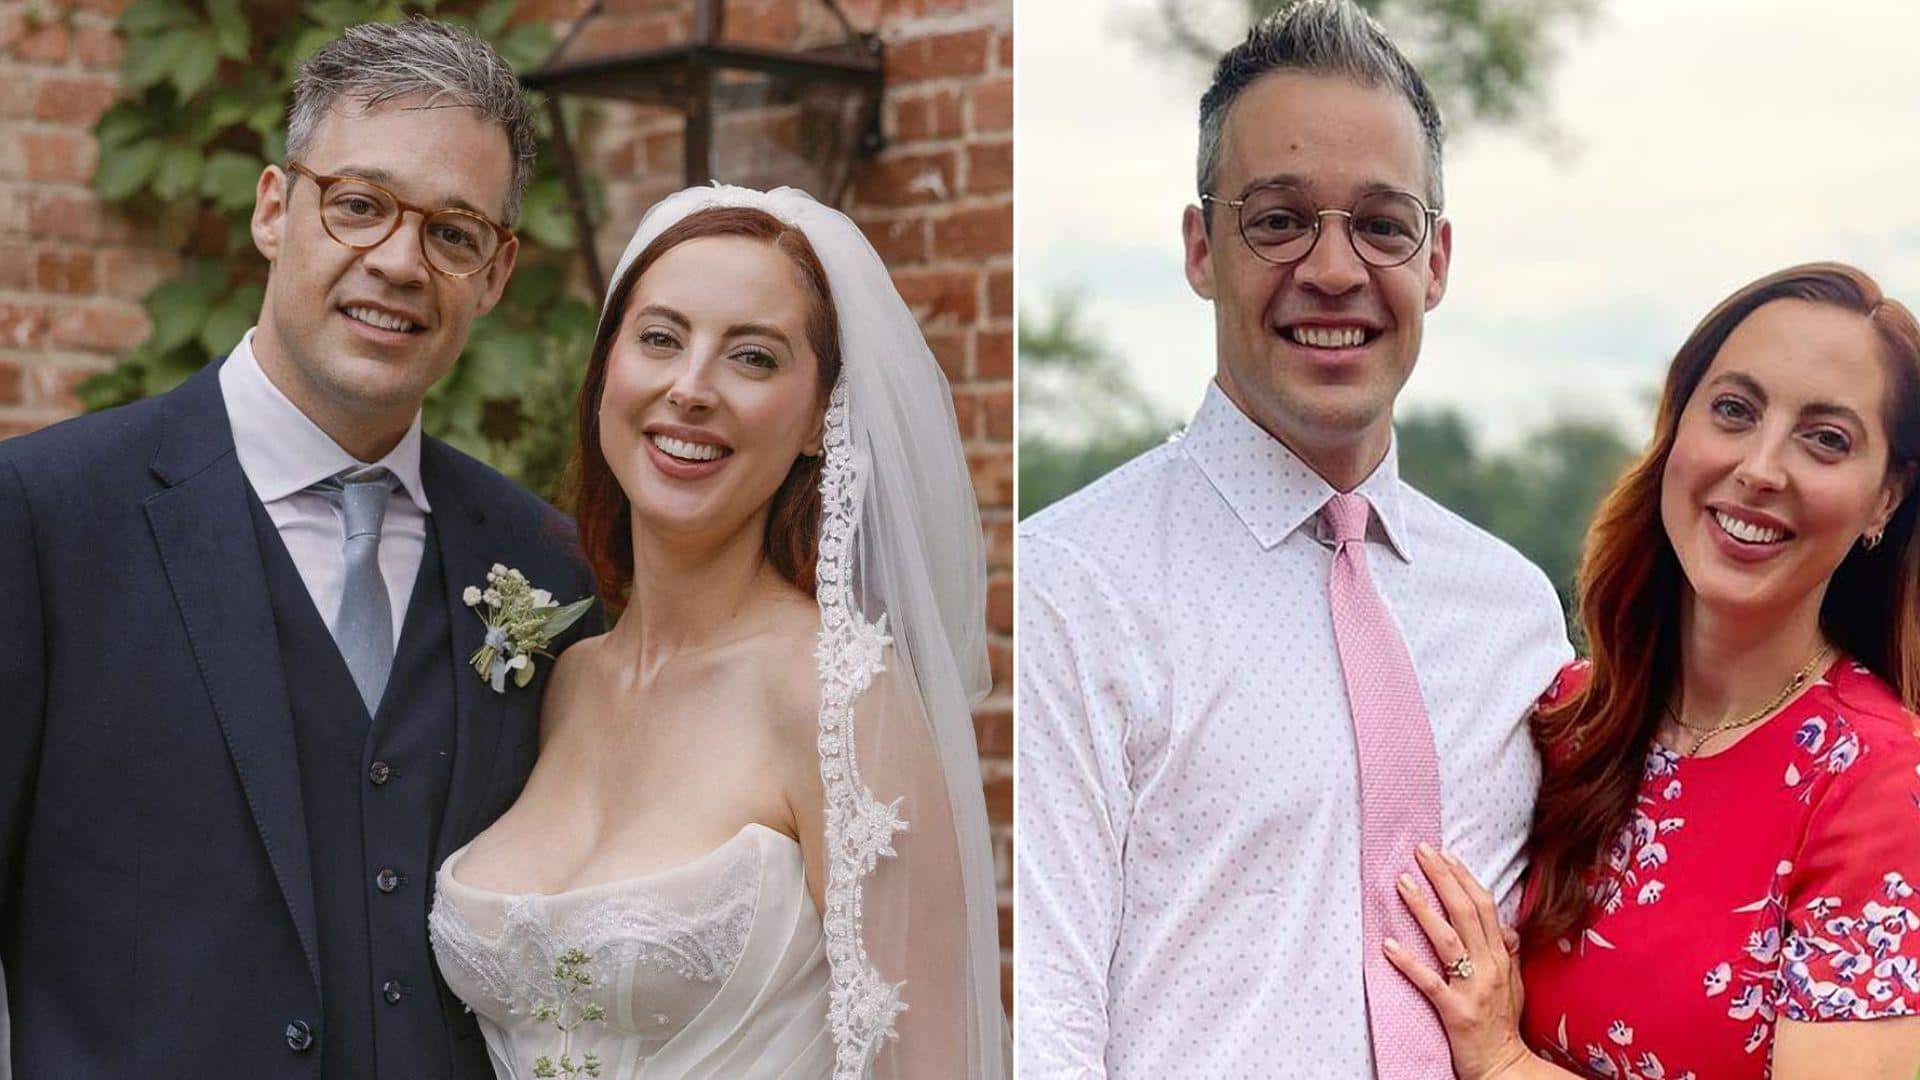 Susan Sarandon's daughter Eva marries chef Ian in 'fairytale' wedding